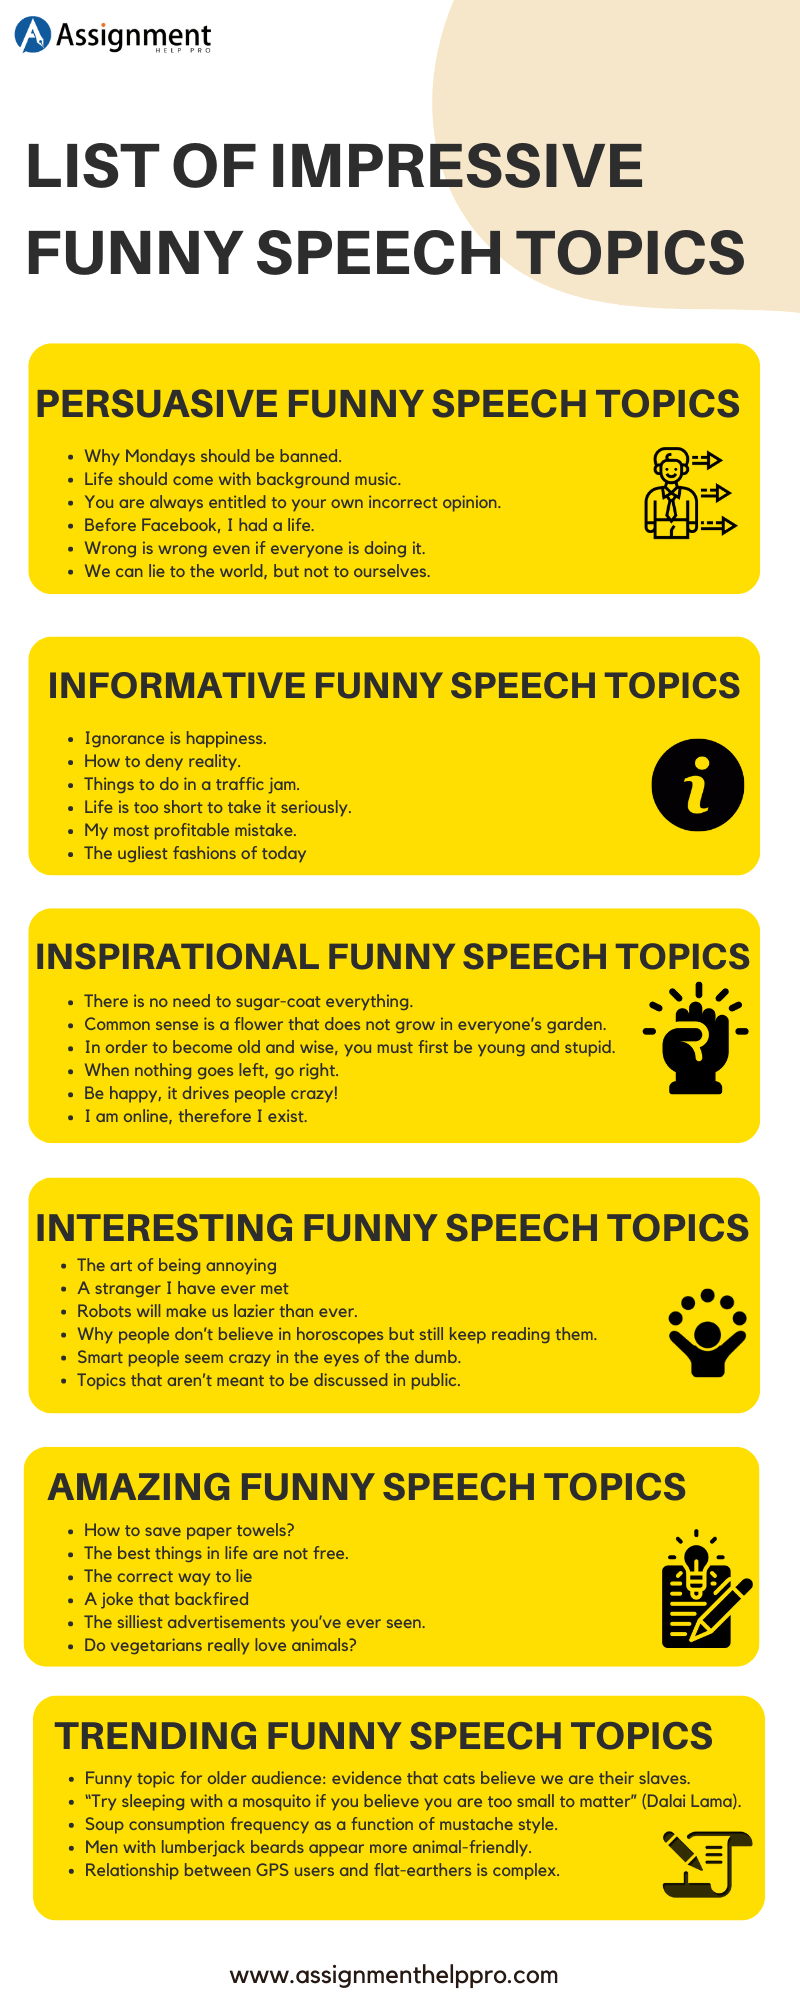 140 Impressive Funny Speech Topics and Ideas To Consider